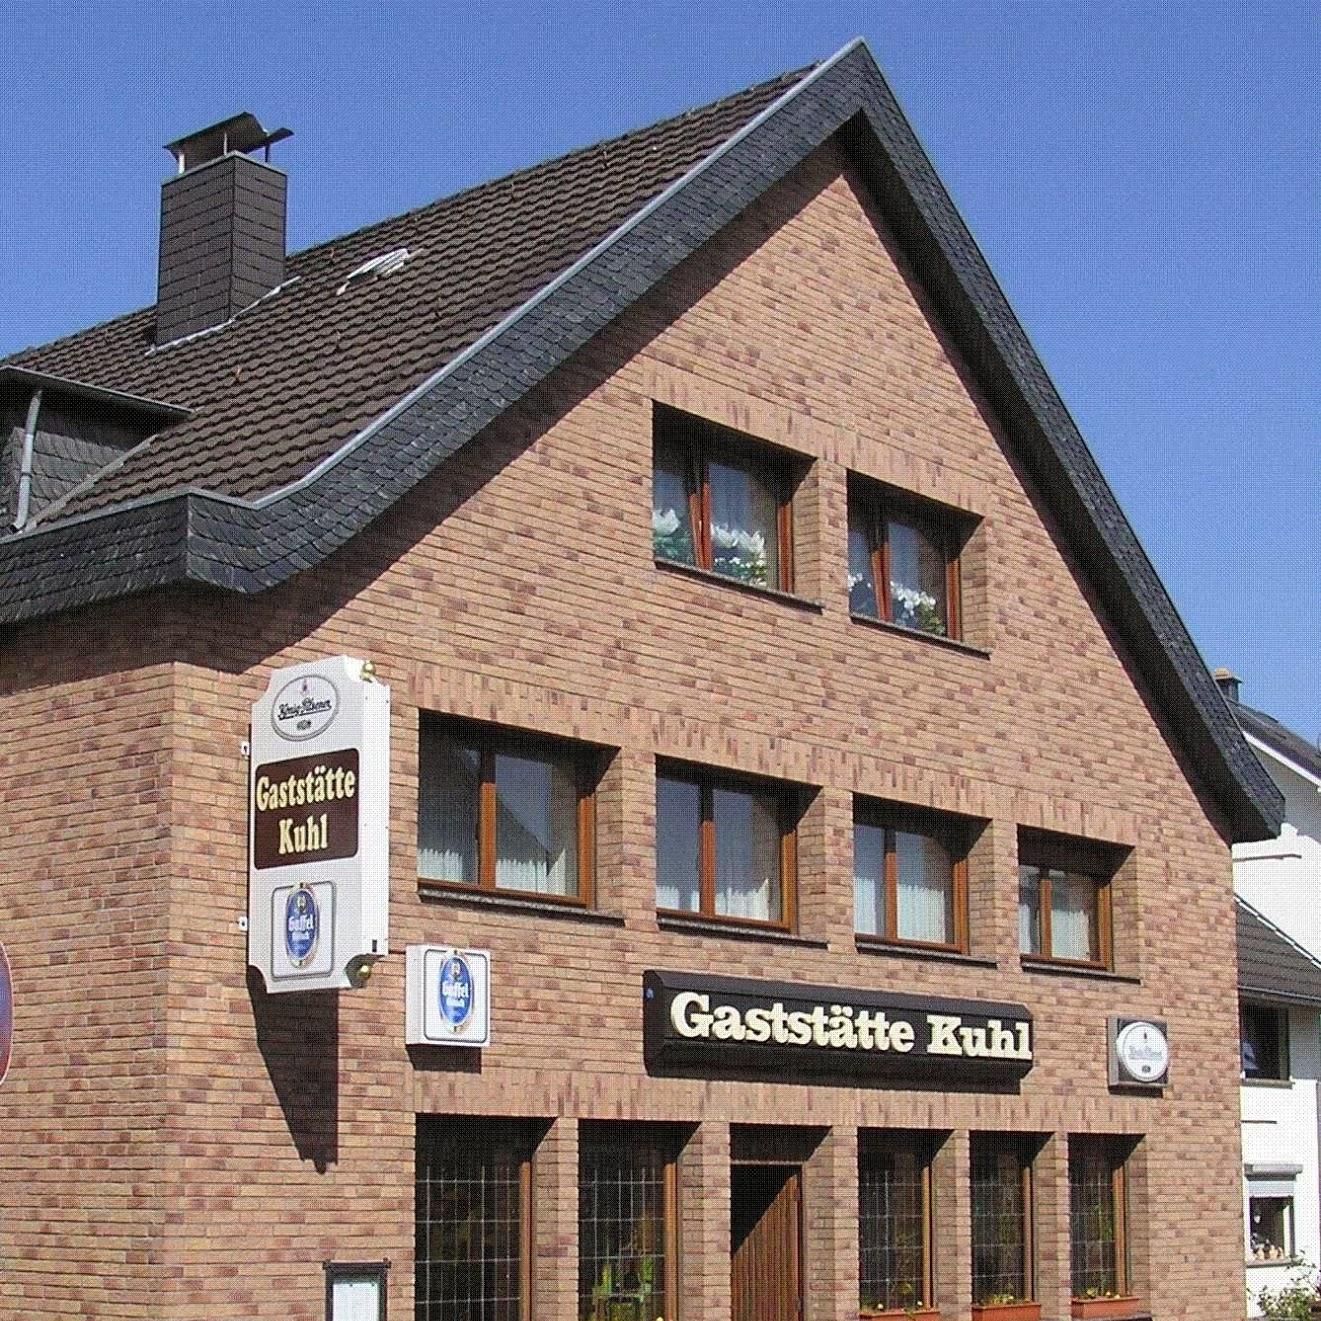 Restaurant "Gaststätte Kuhl" in Brühl